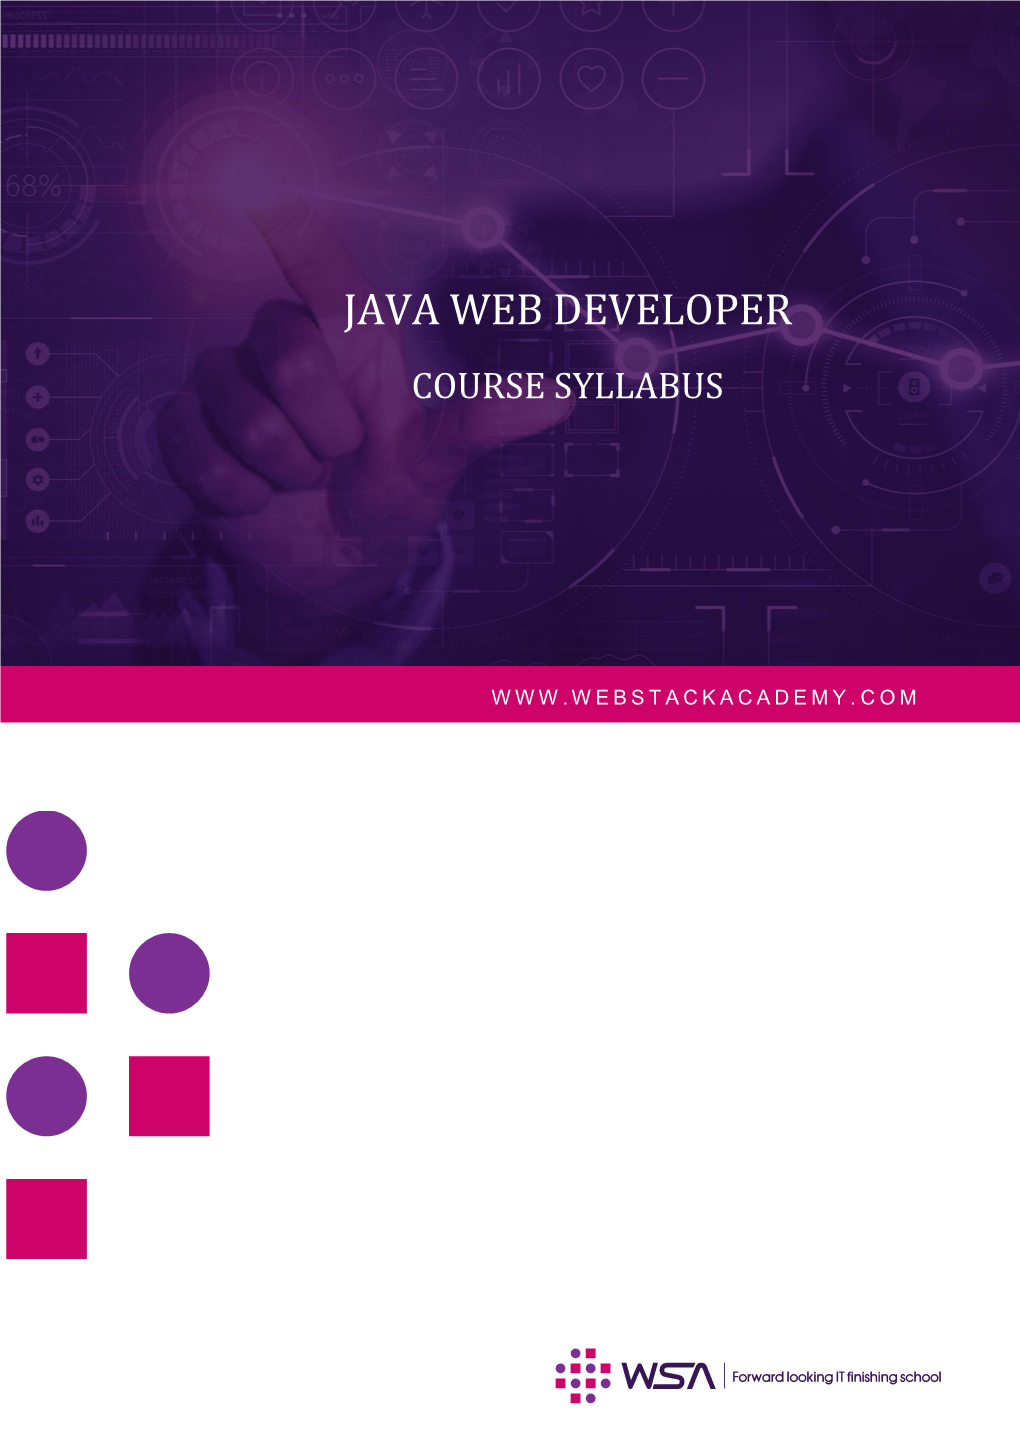 Java Web Developer Course Syllabus